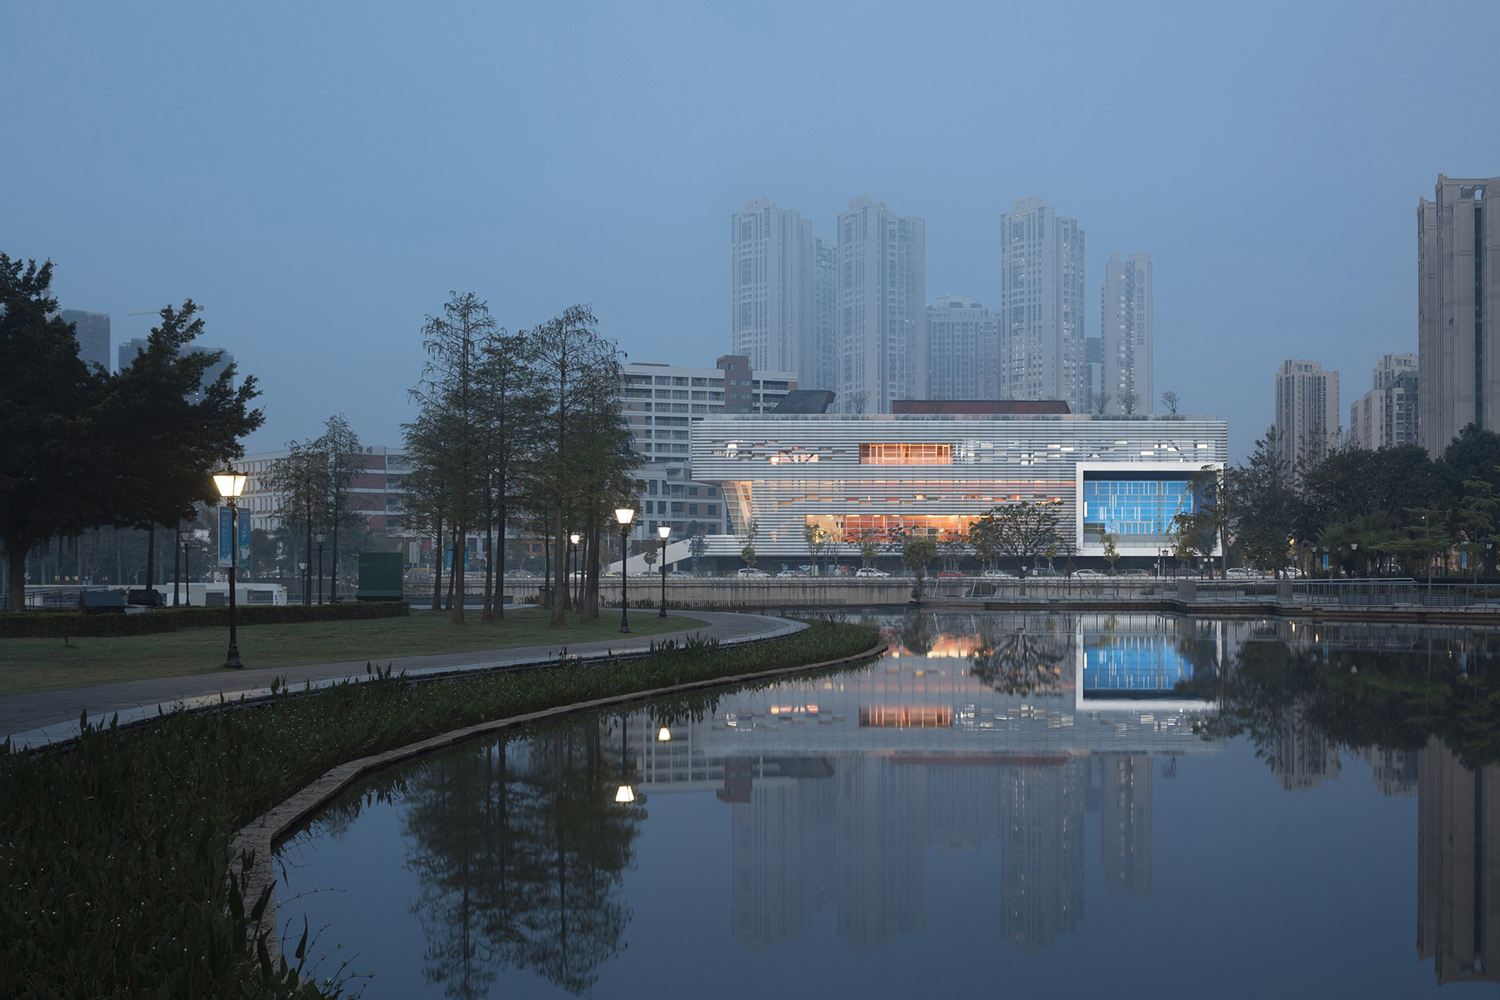 Pingshan Performing Arts Center